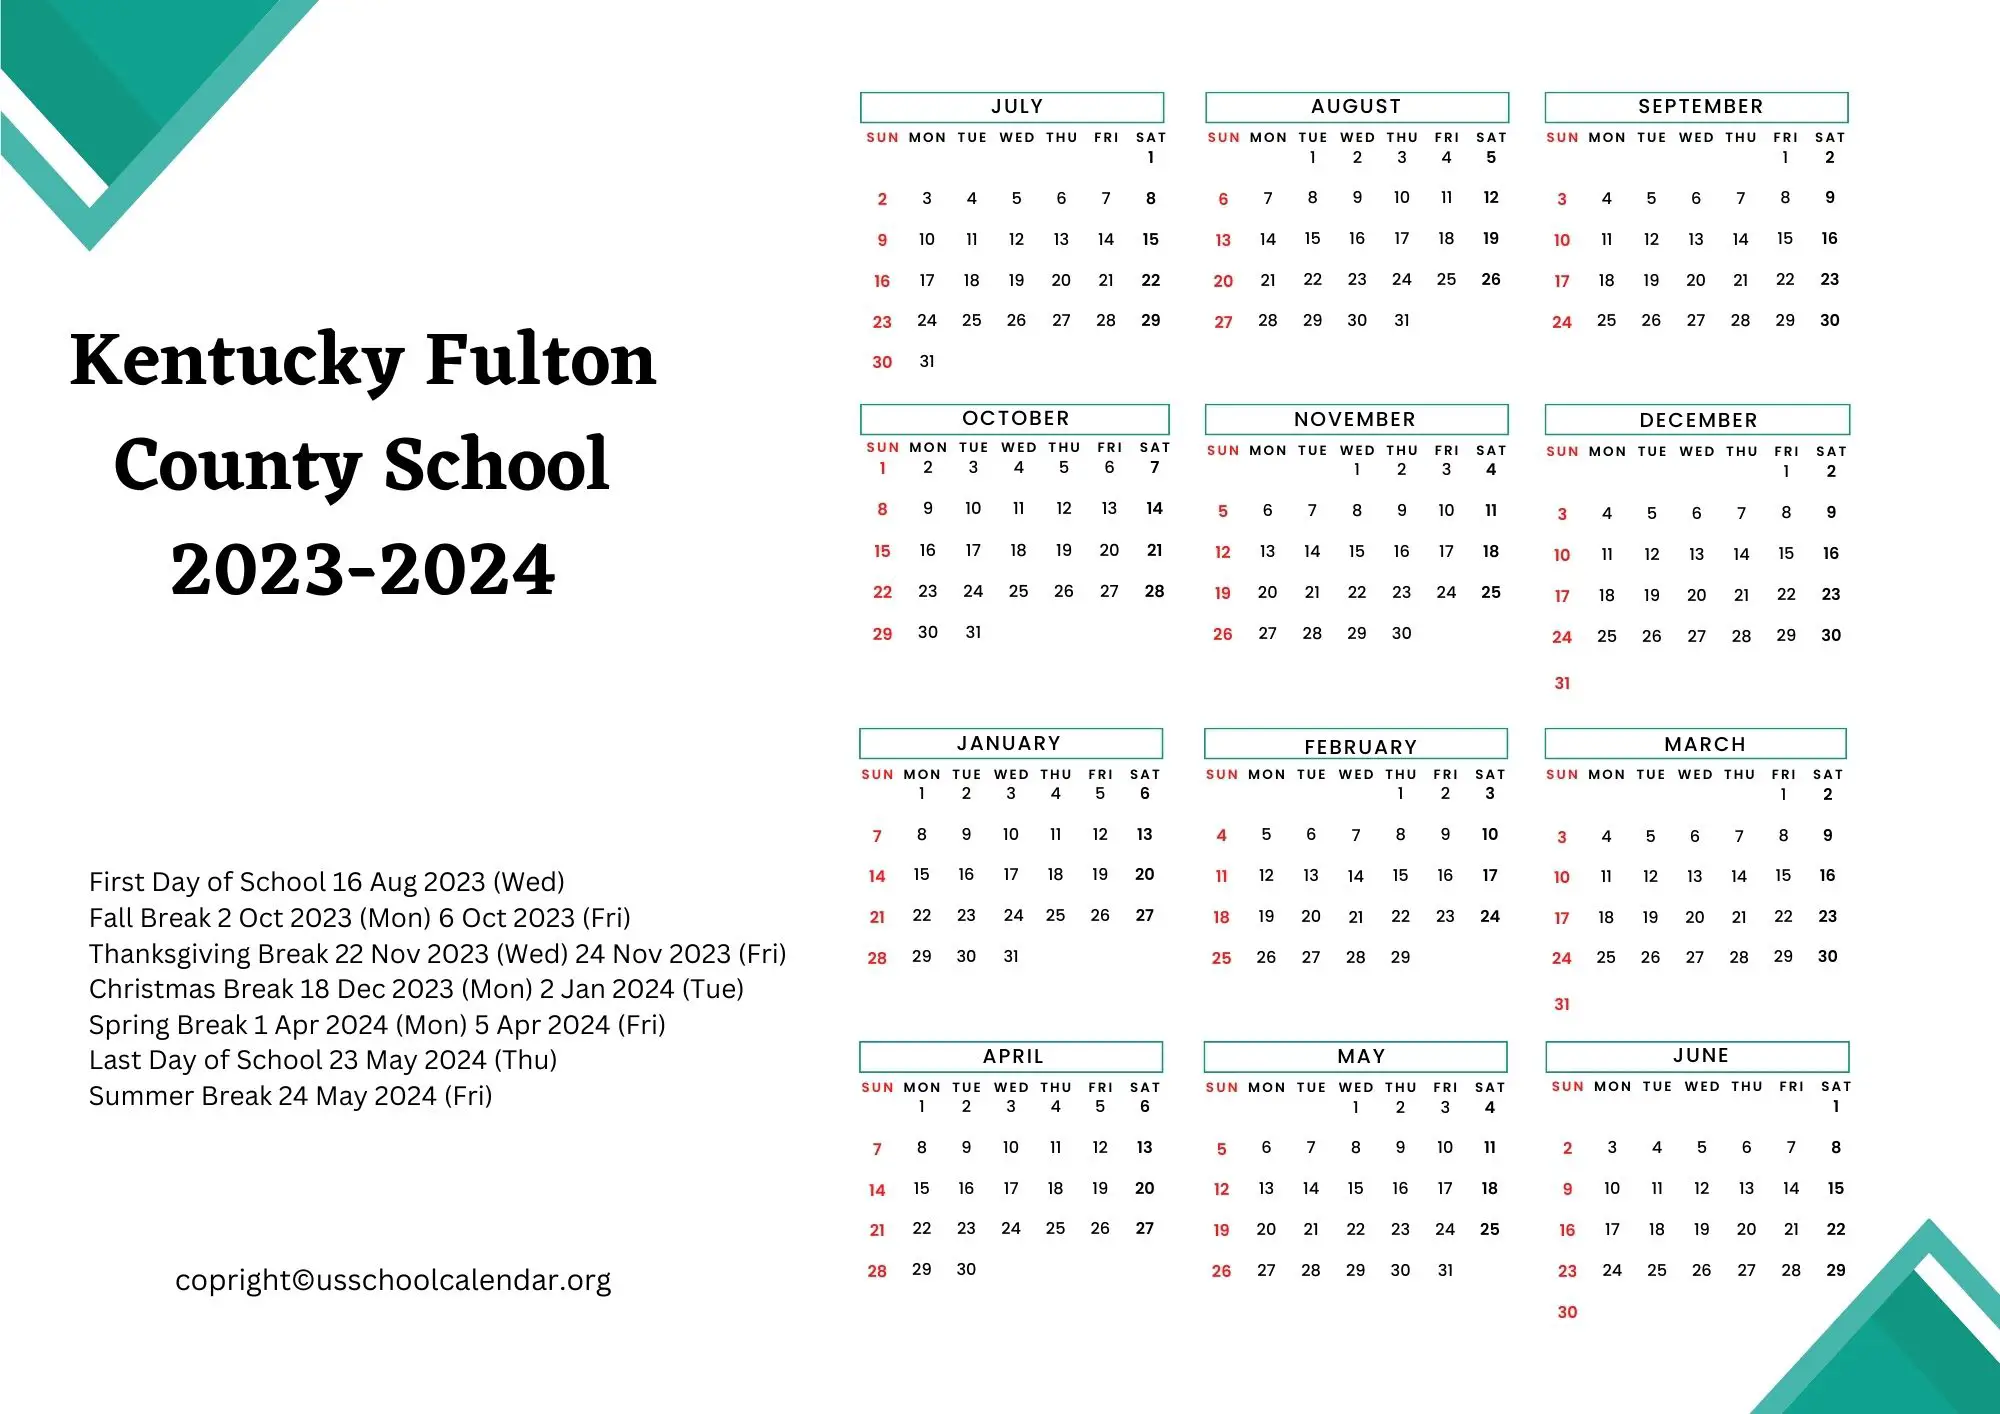 kentucky-fulton-county-school-calendar-with-holidays-2023-2024